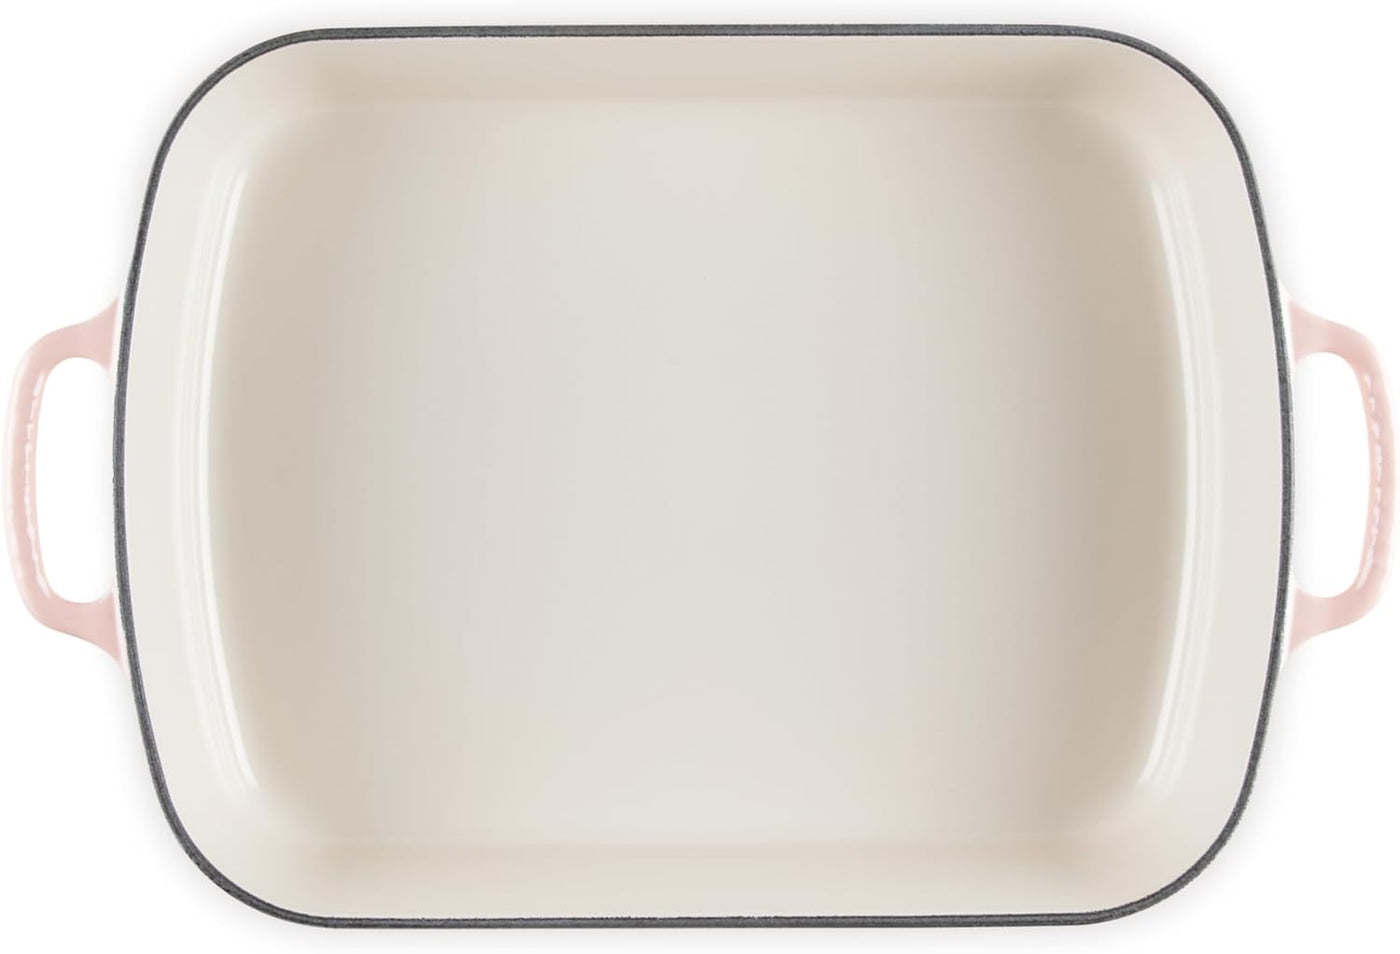 Le Creuset Signature Enameled Cast Iron Rectangular Roasting Pan, 5.25-Quart, Peche - Kitchen Universe